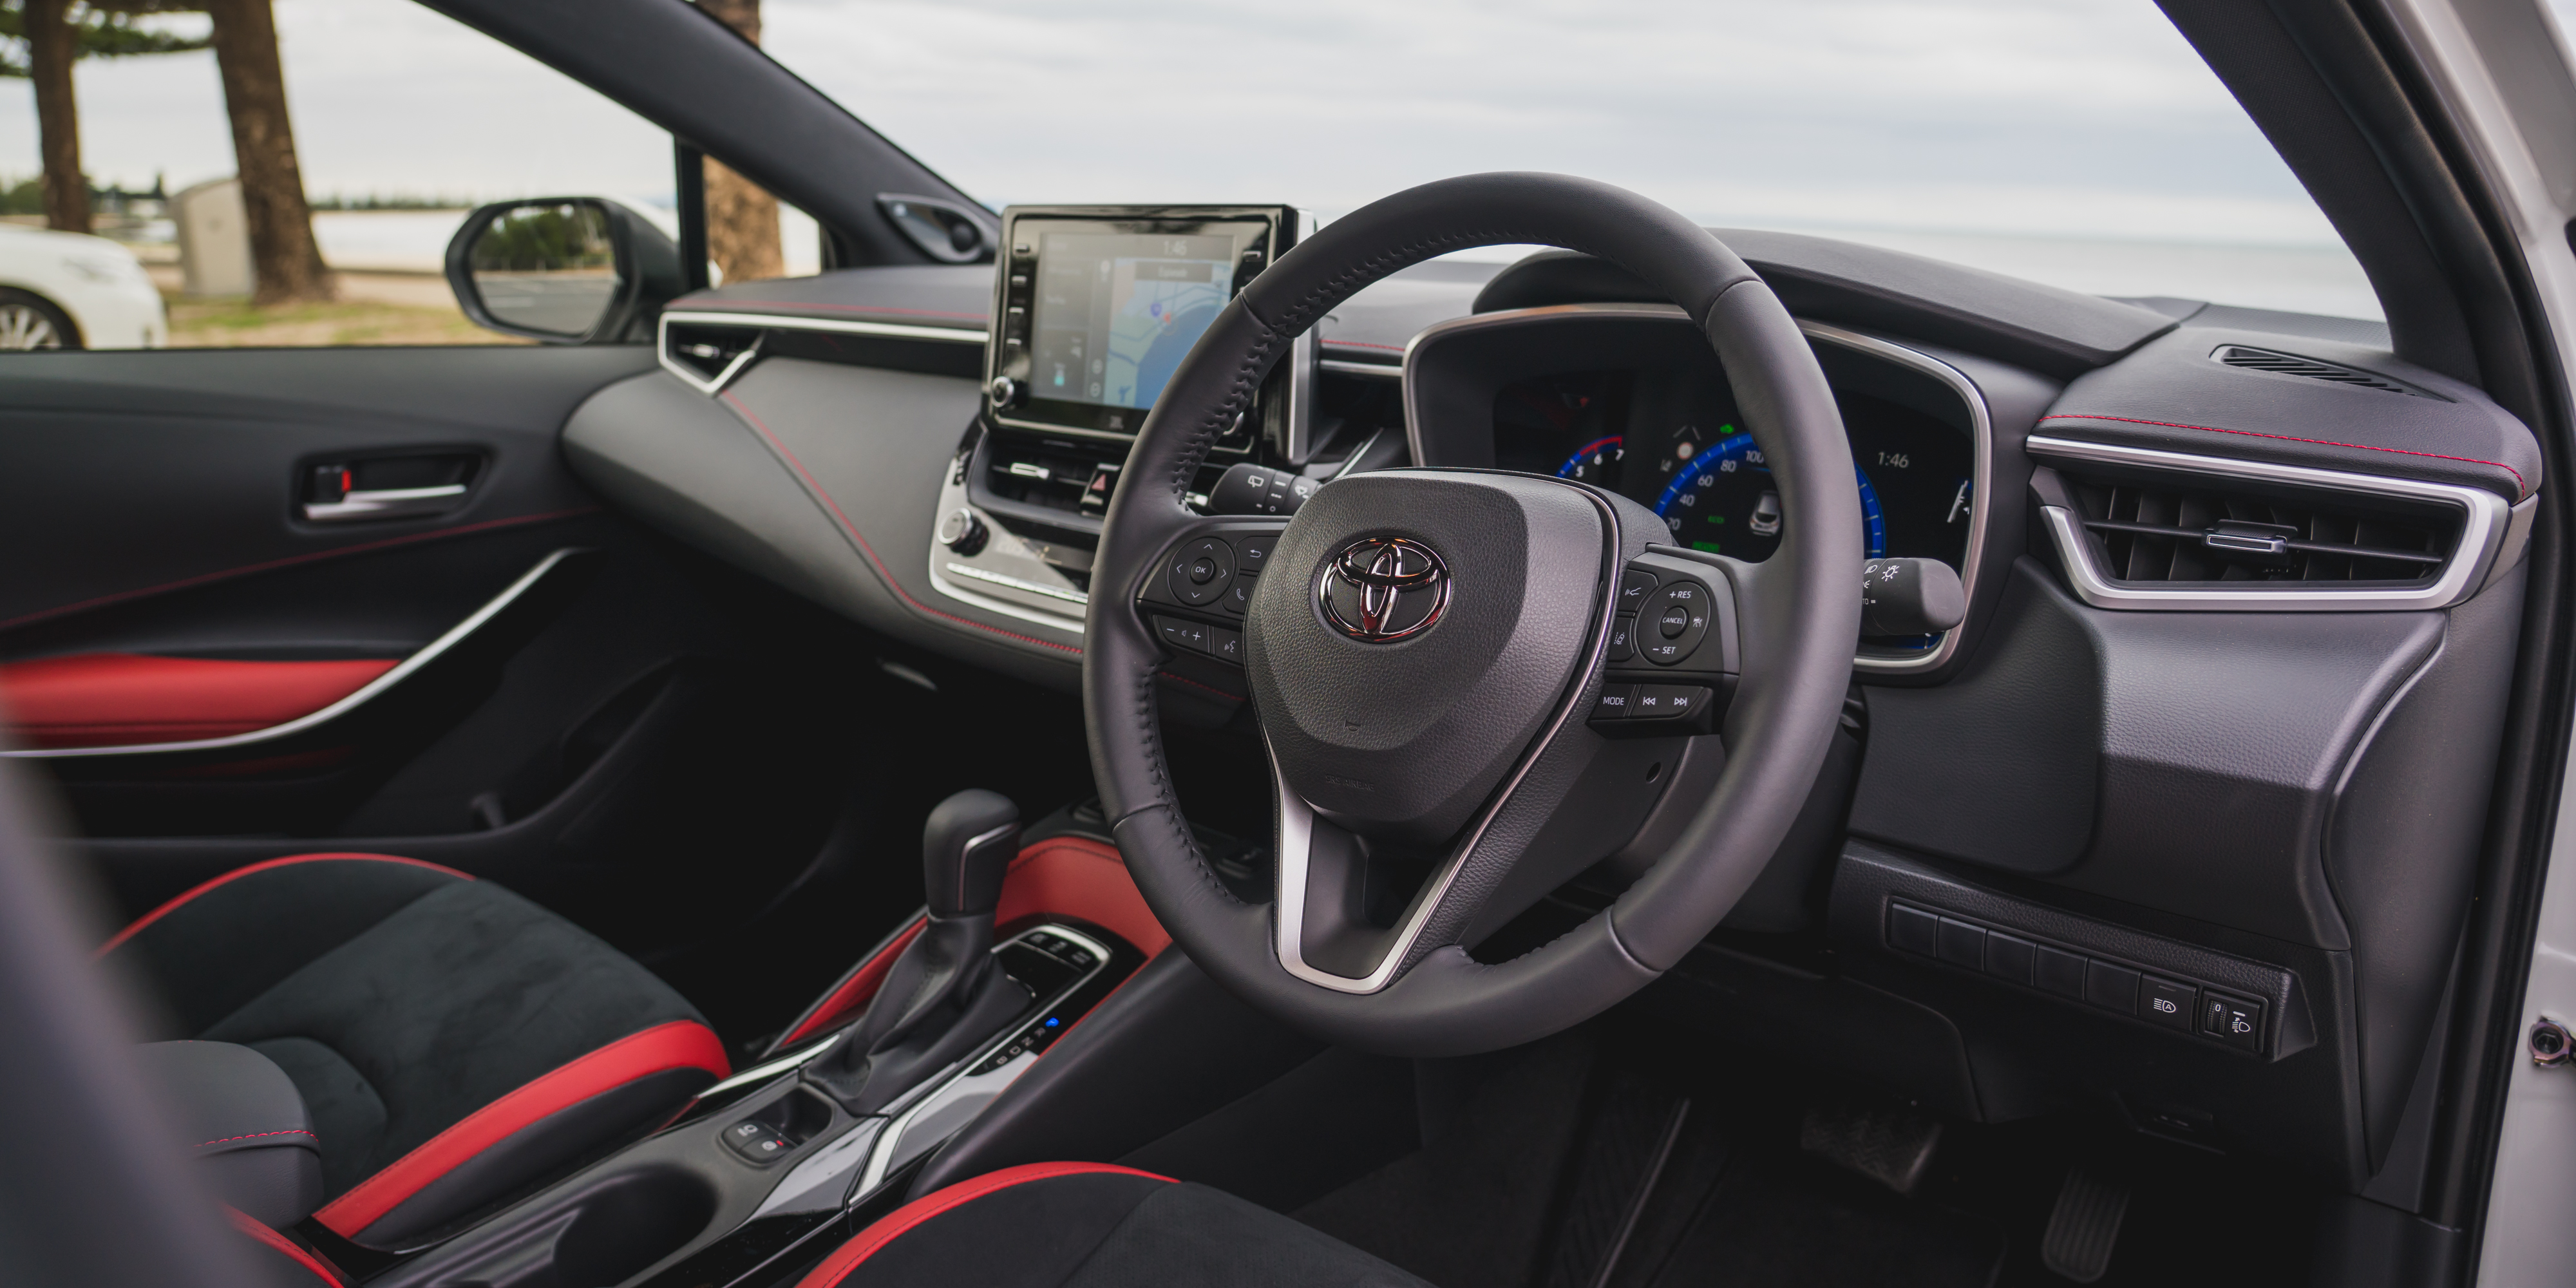 2019 Toyota Corolla Zr Hybrid Review Caradvice